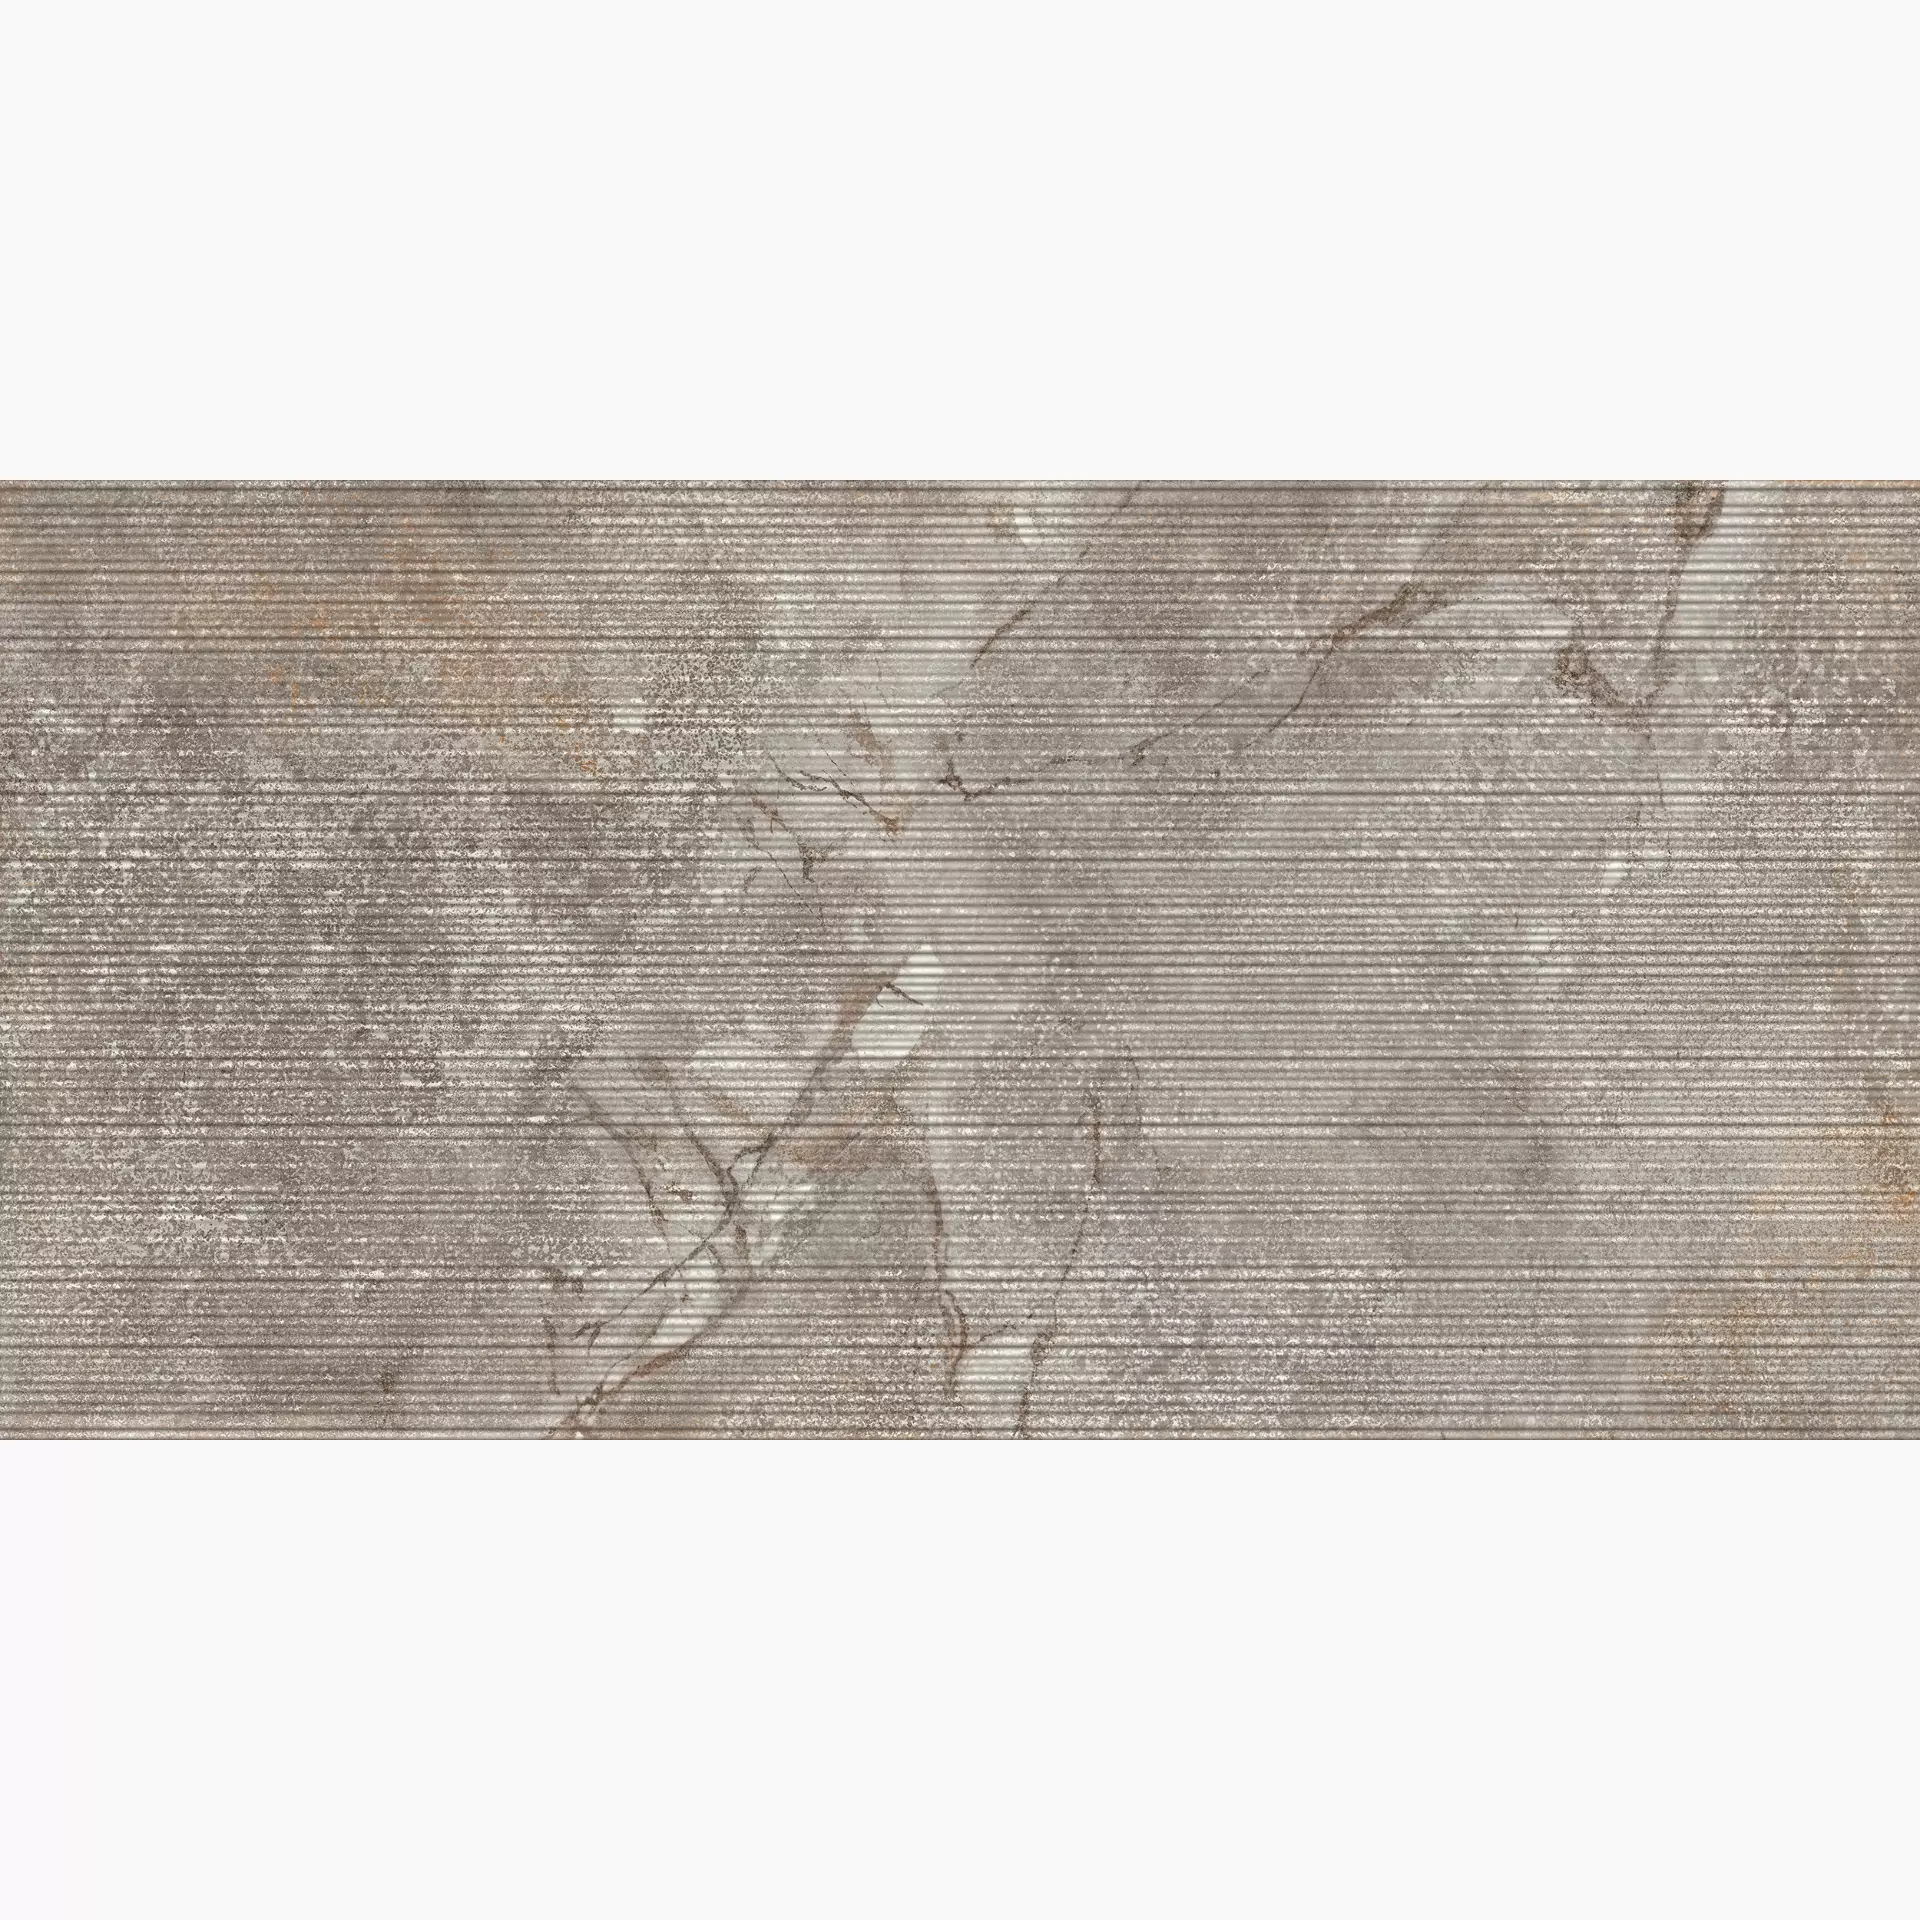 Fondovalle Upper Dove Grey Natural Decor Stick UPP097 60x120cm rectified 8,5mm